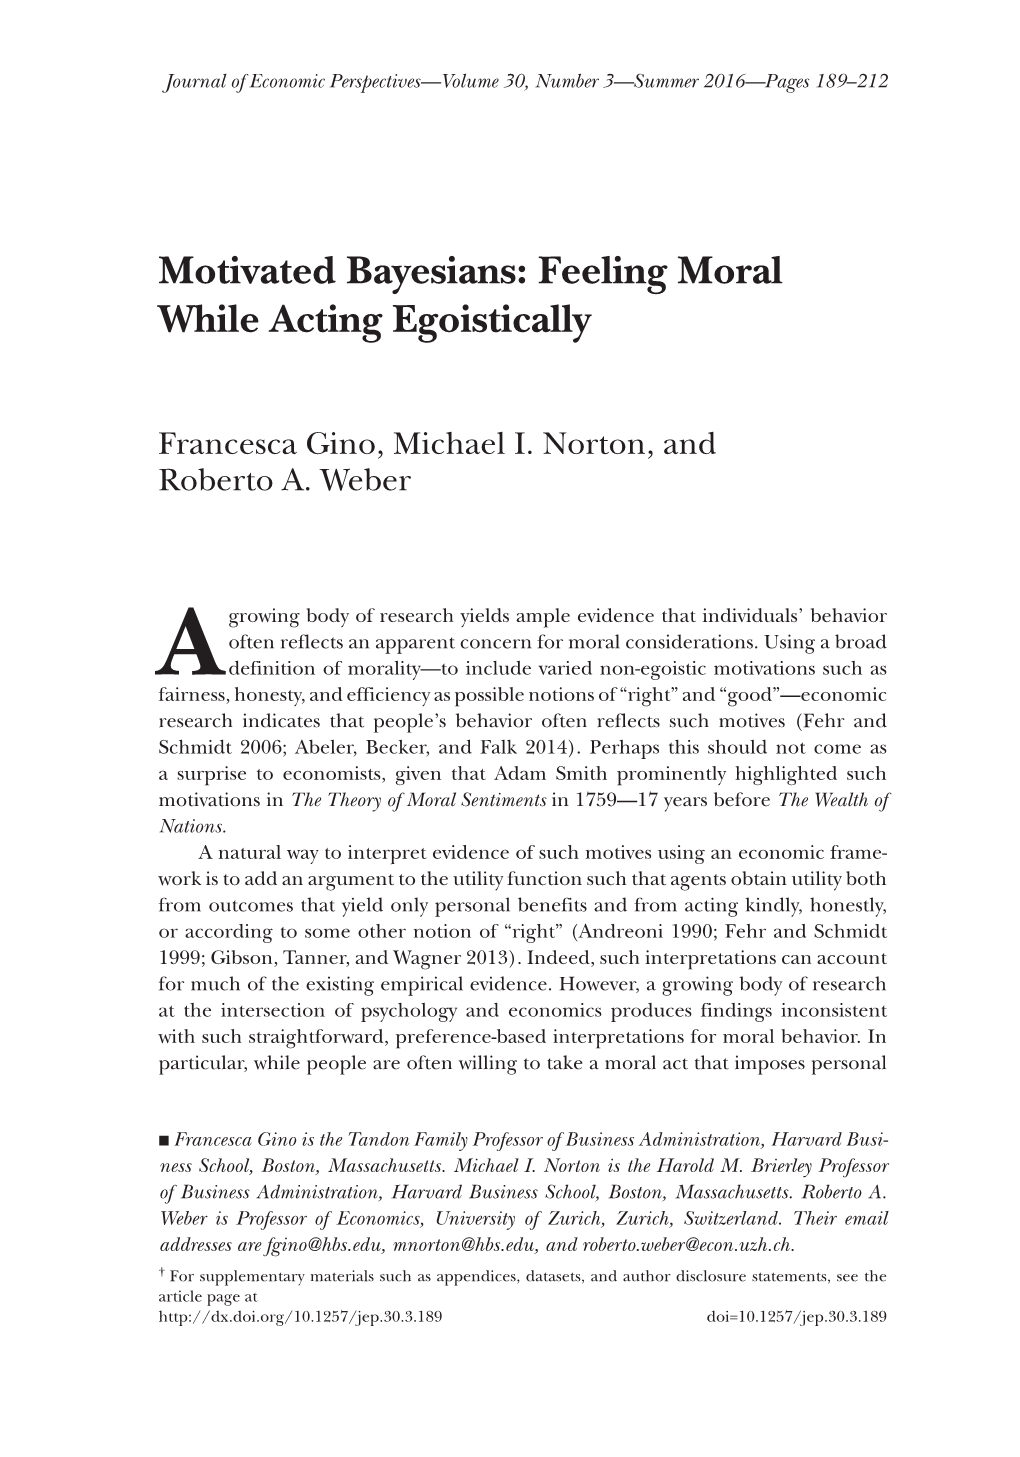 Motivated Bayesians: Feeling Moral While Acting Egoistically